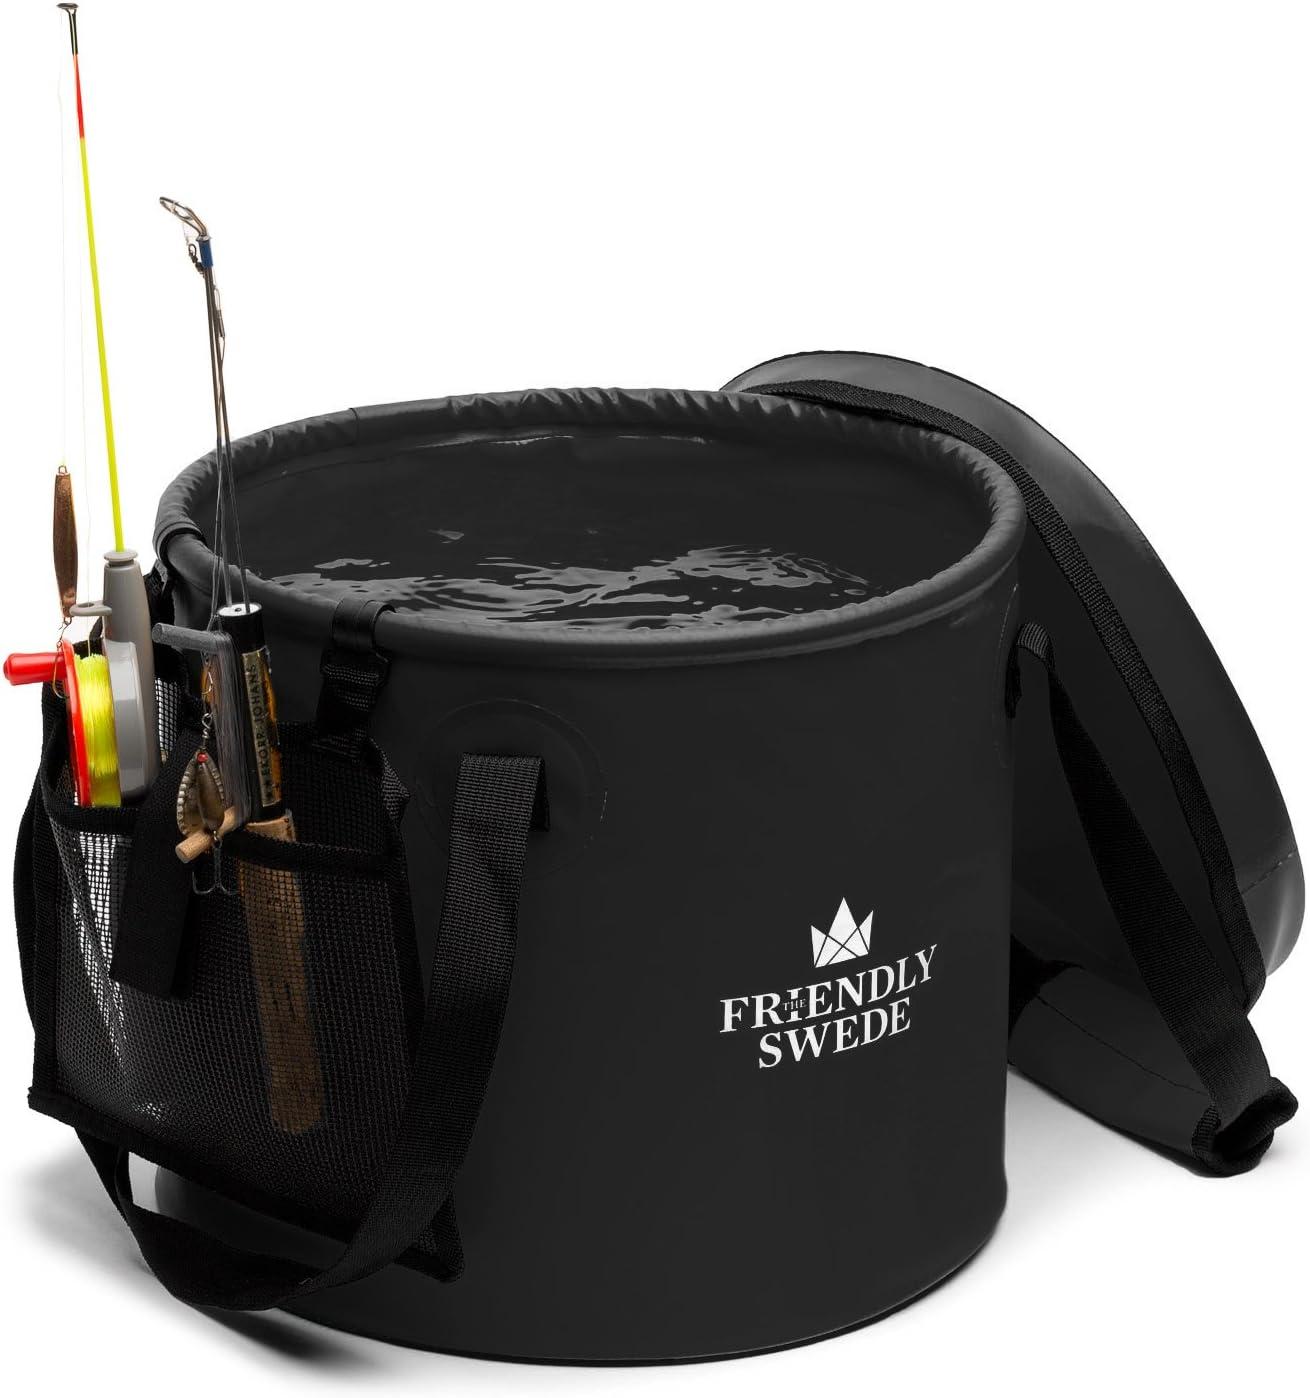 Eurow Collapsible Bucket with Handle Indoor Outdoor Travel